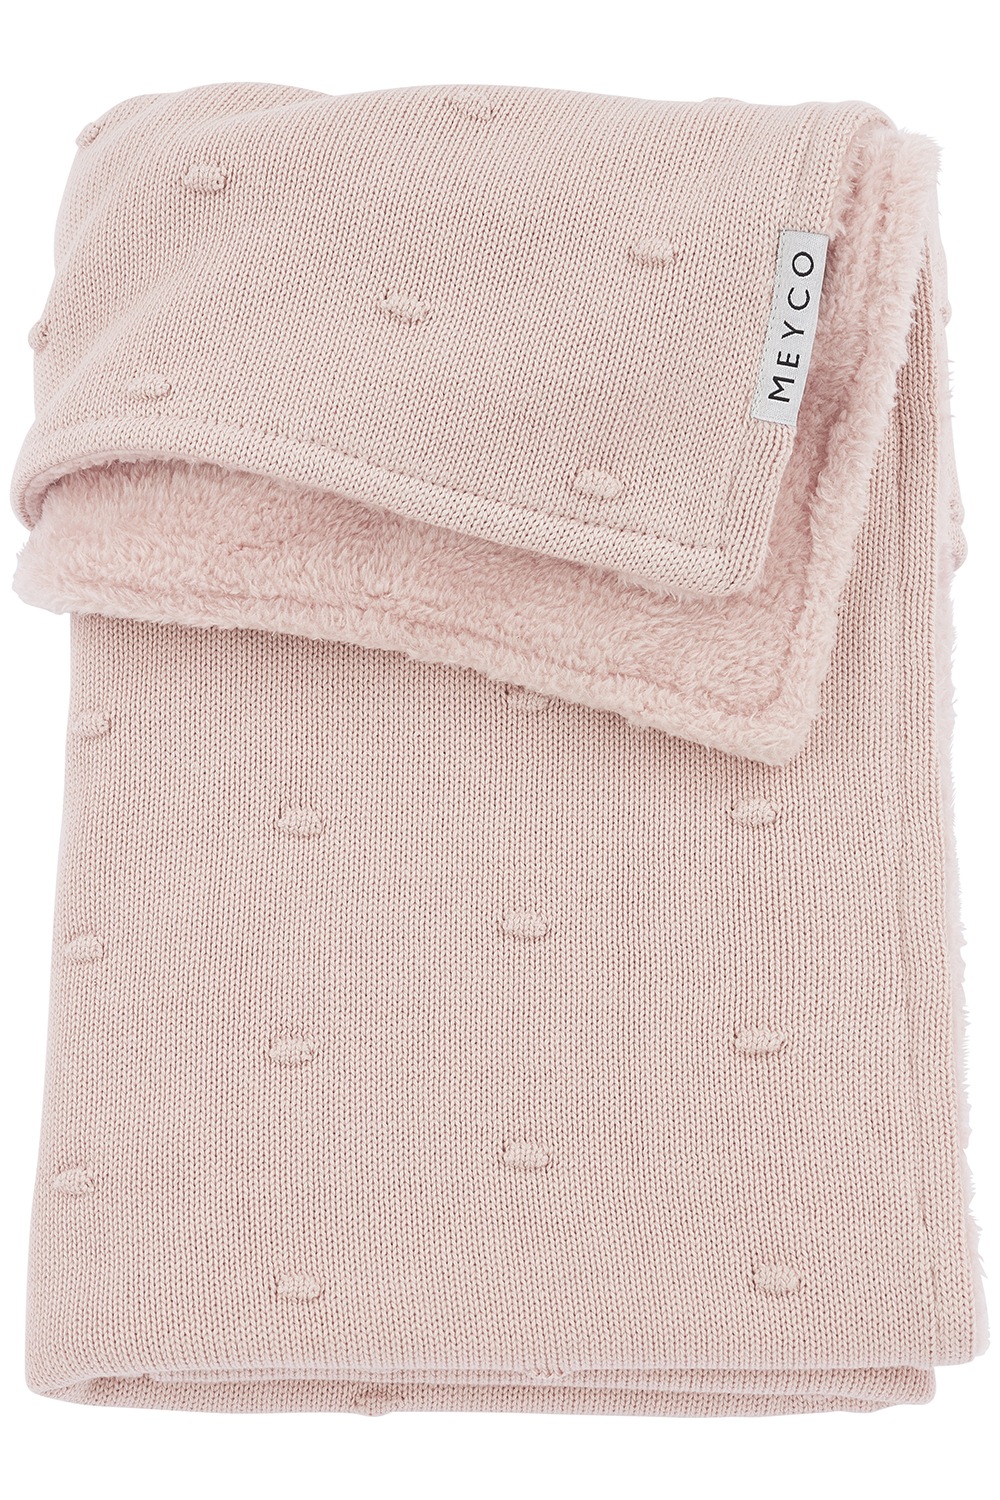 Cot Bed Blanket Mini Knots Fleece - Soft Pink - 100x150cm